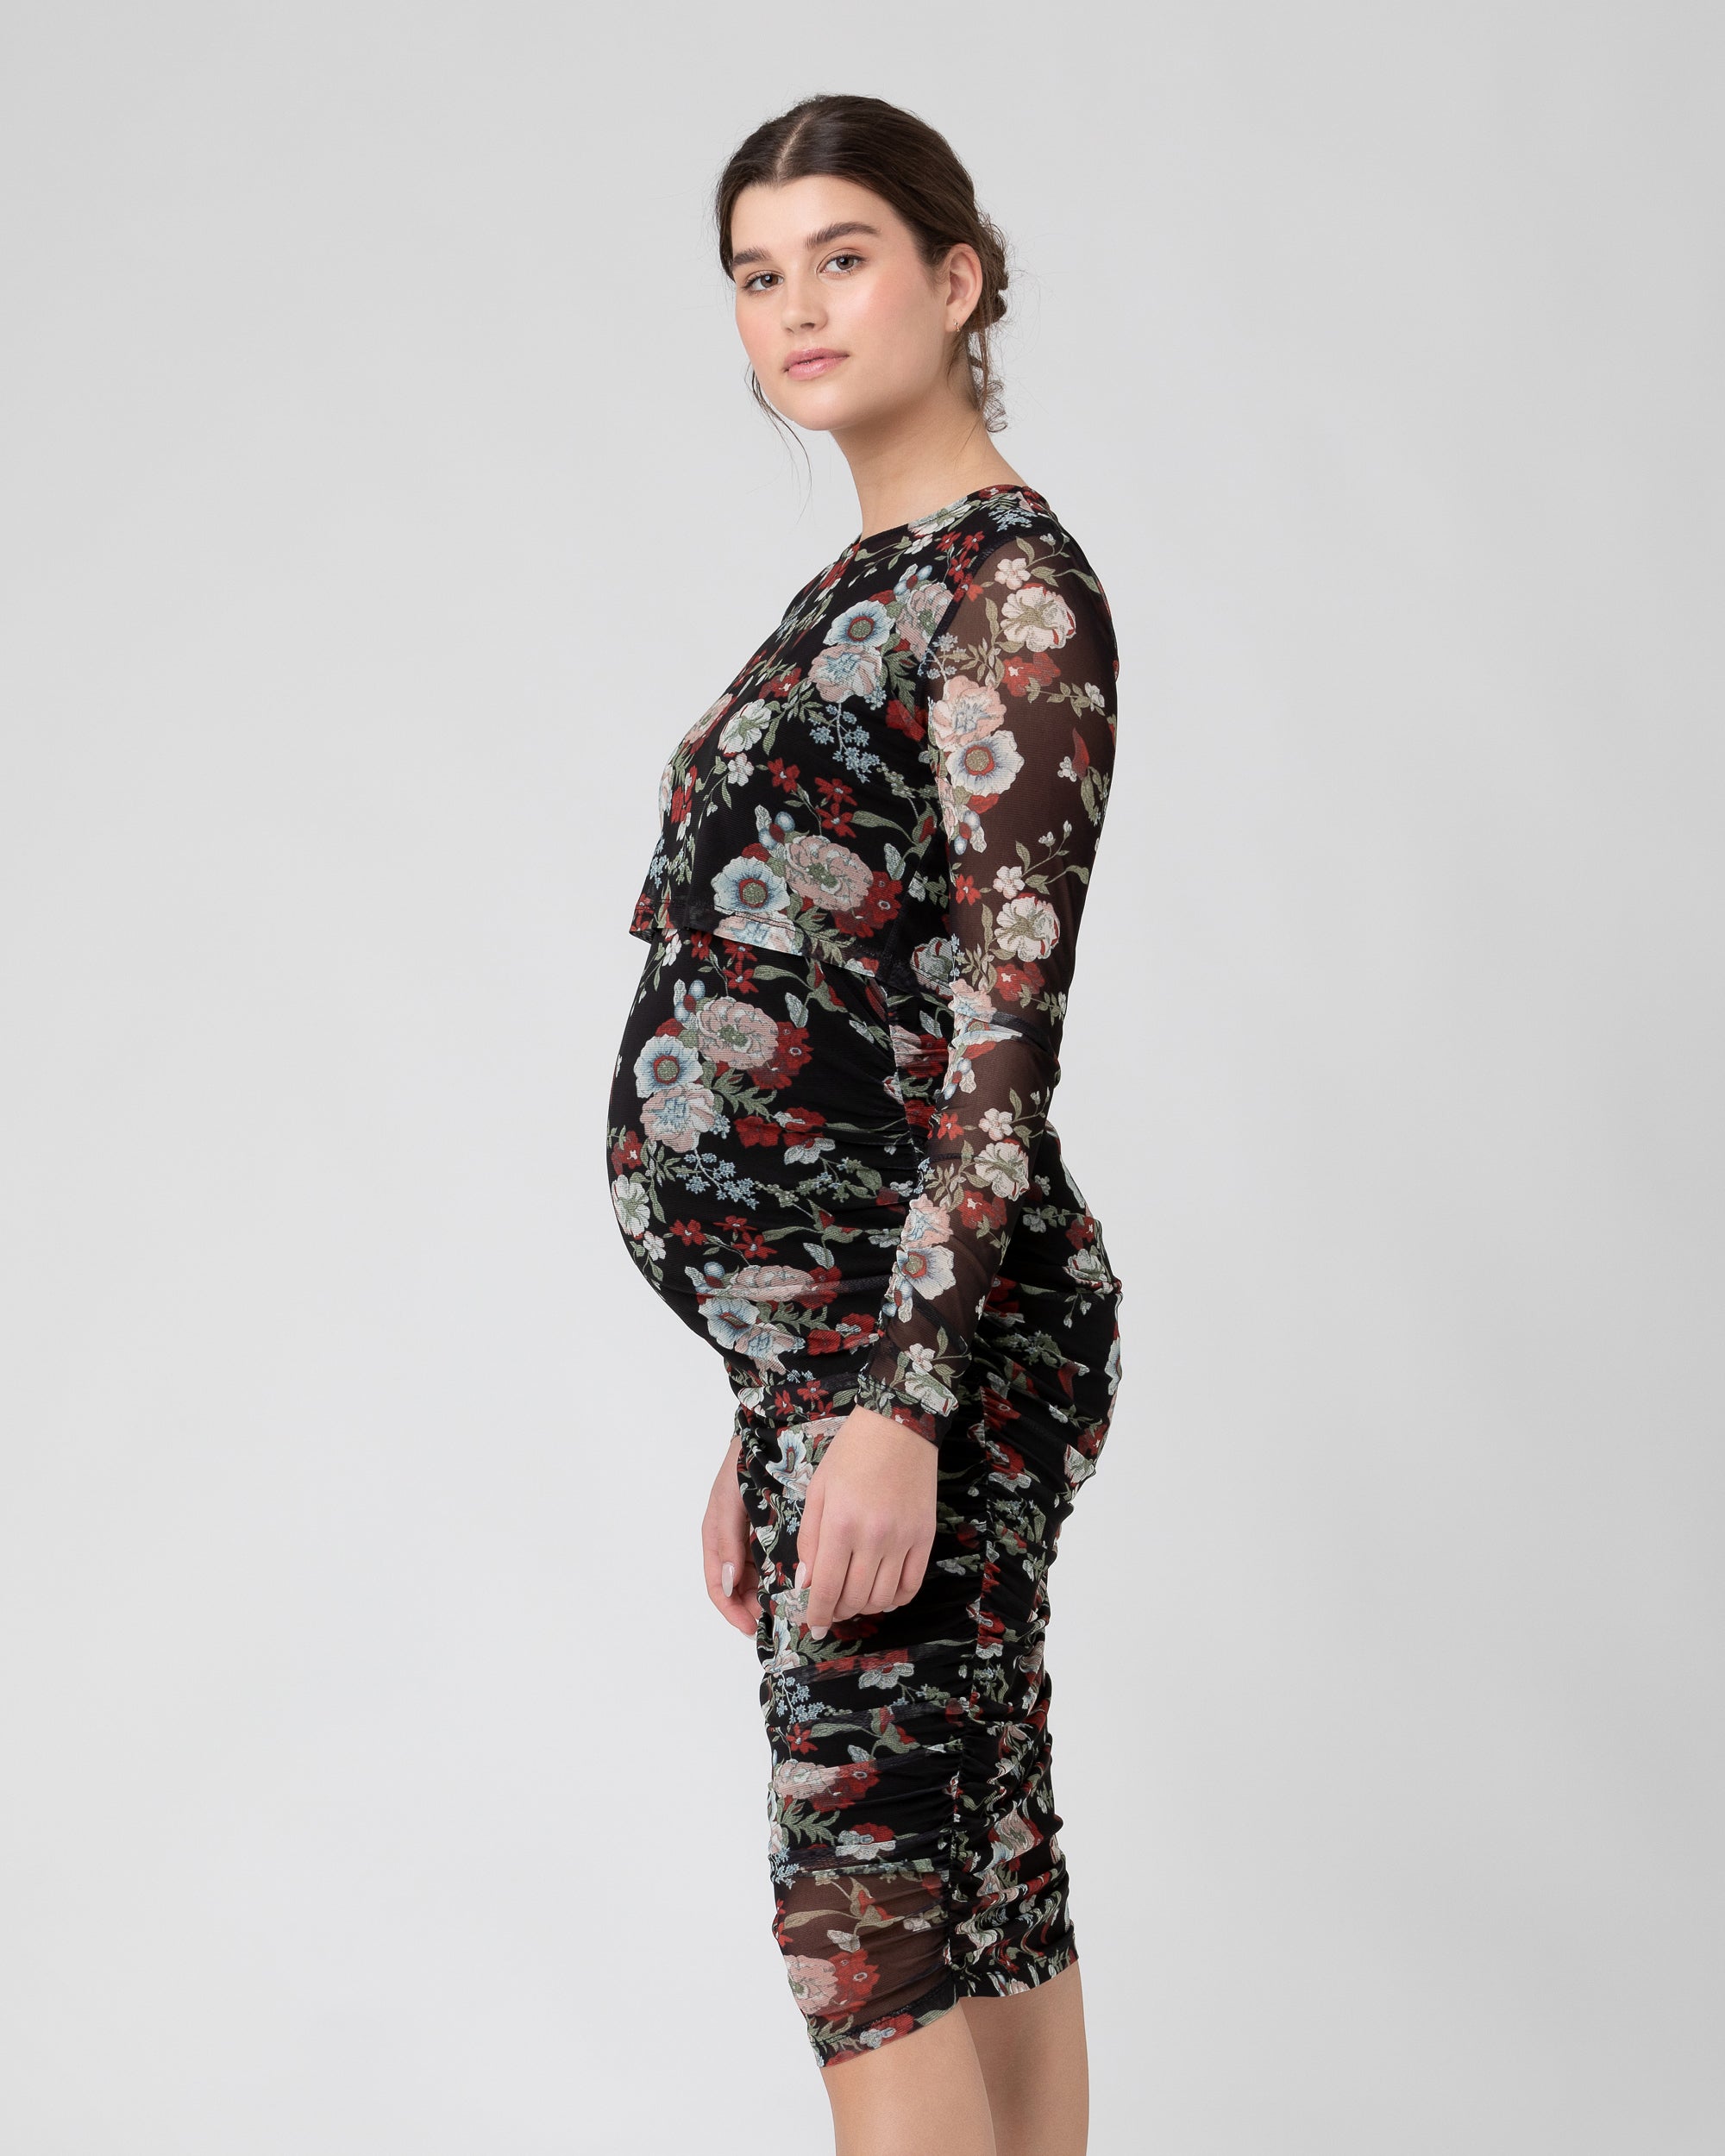 Ripe Maternity Maternity Ripe Willow Shirred Nursing Dress Black - Macy's